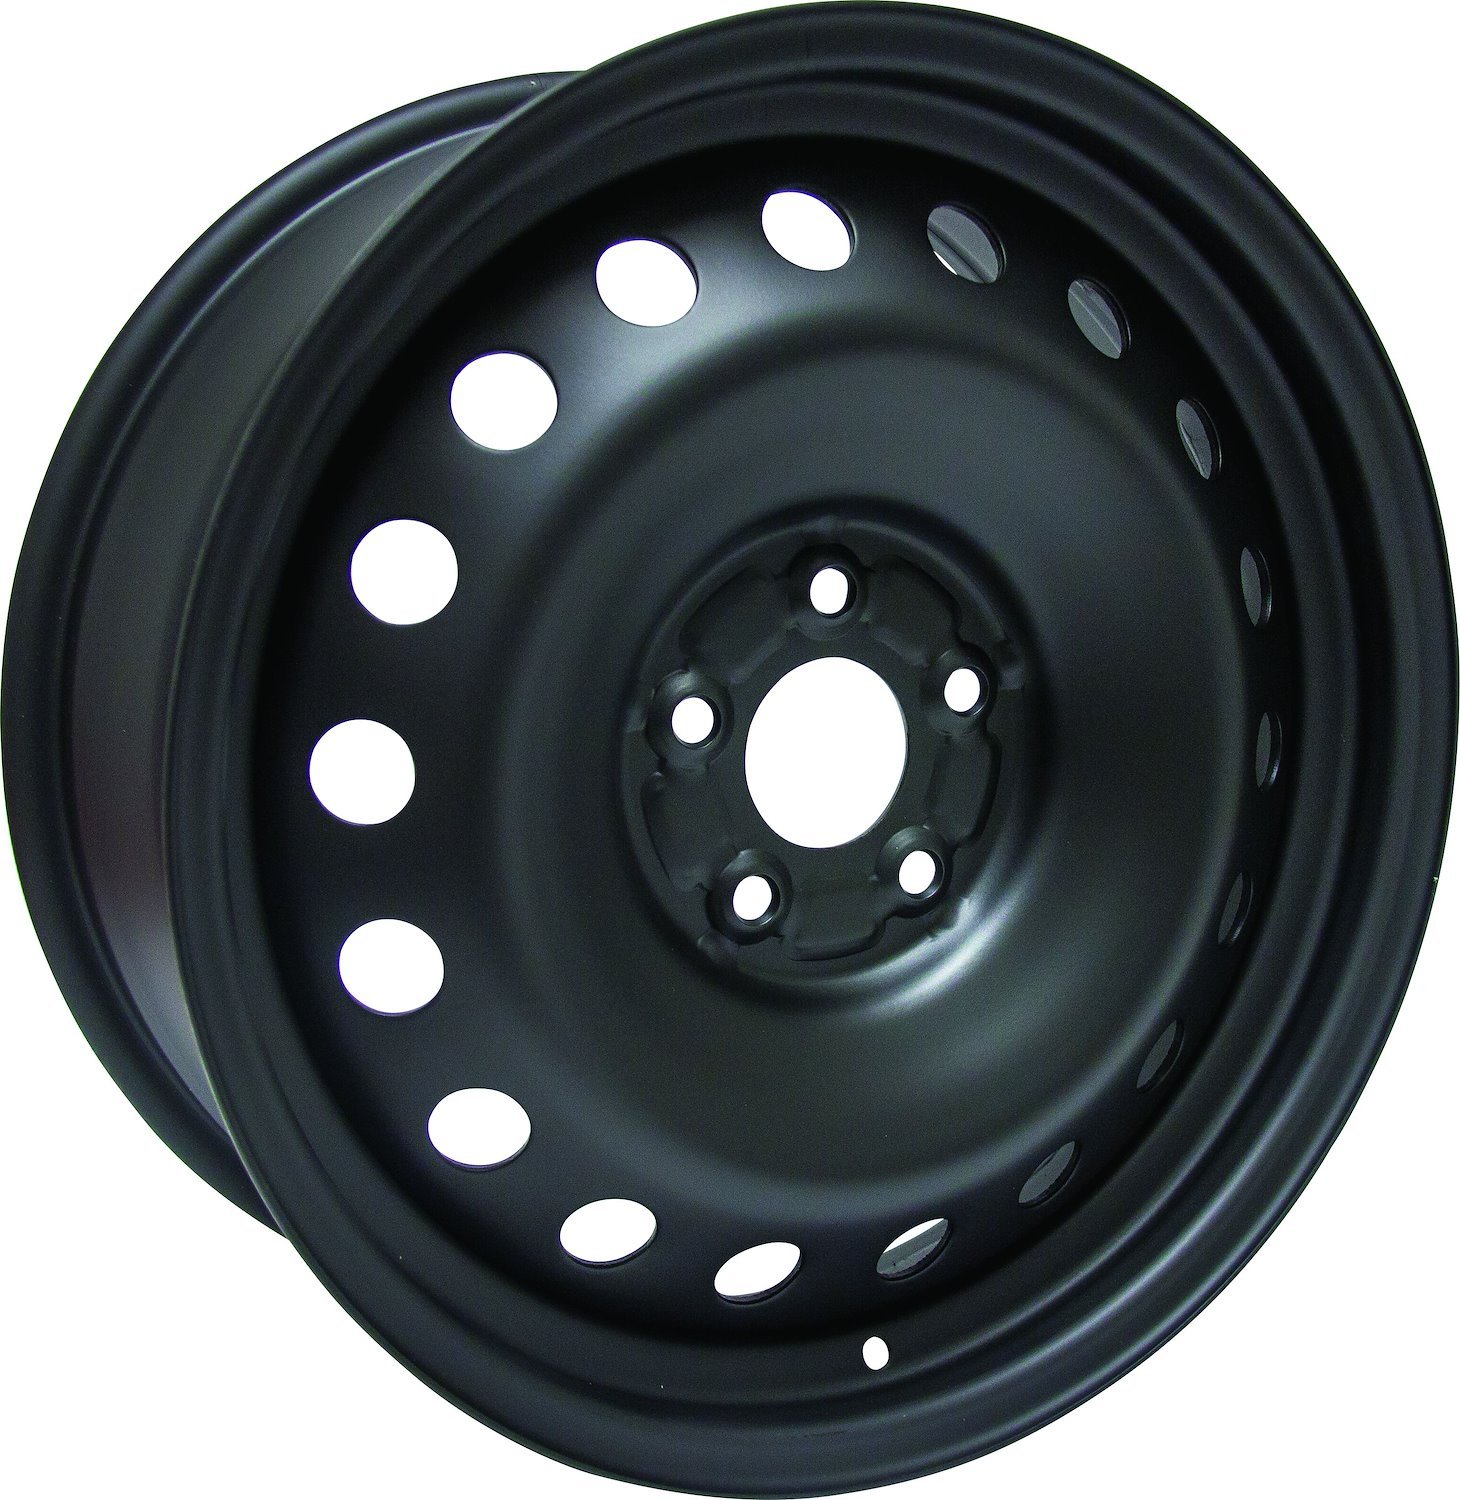 X48566 Steel Wheel [Size: 18" x 7.50"] Black Finish